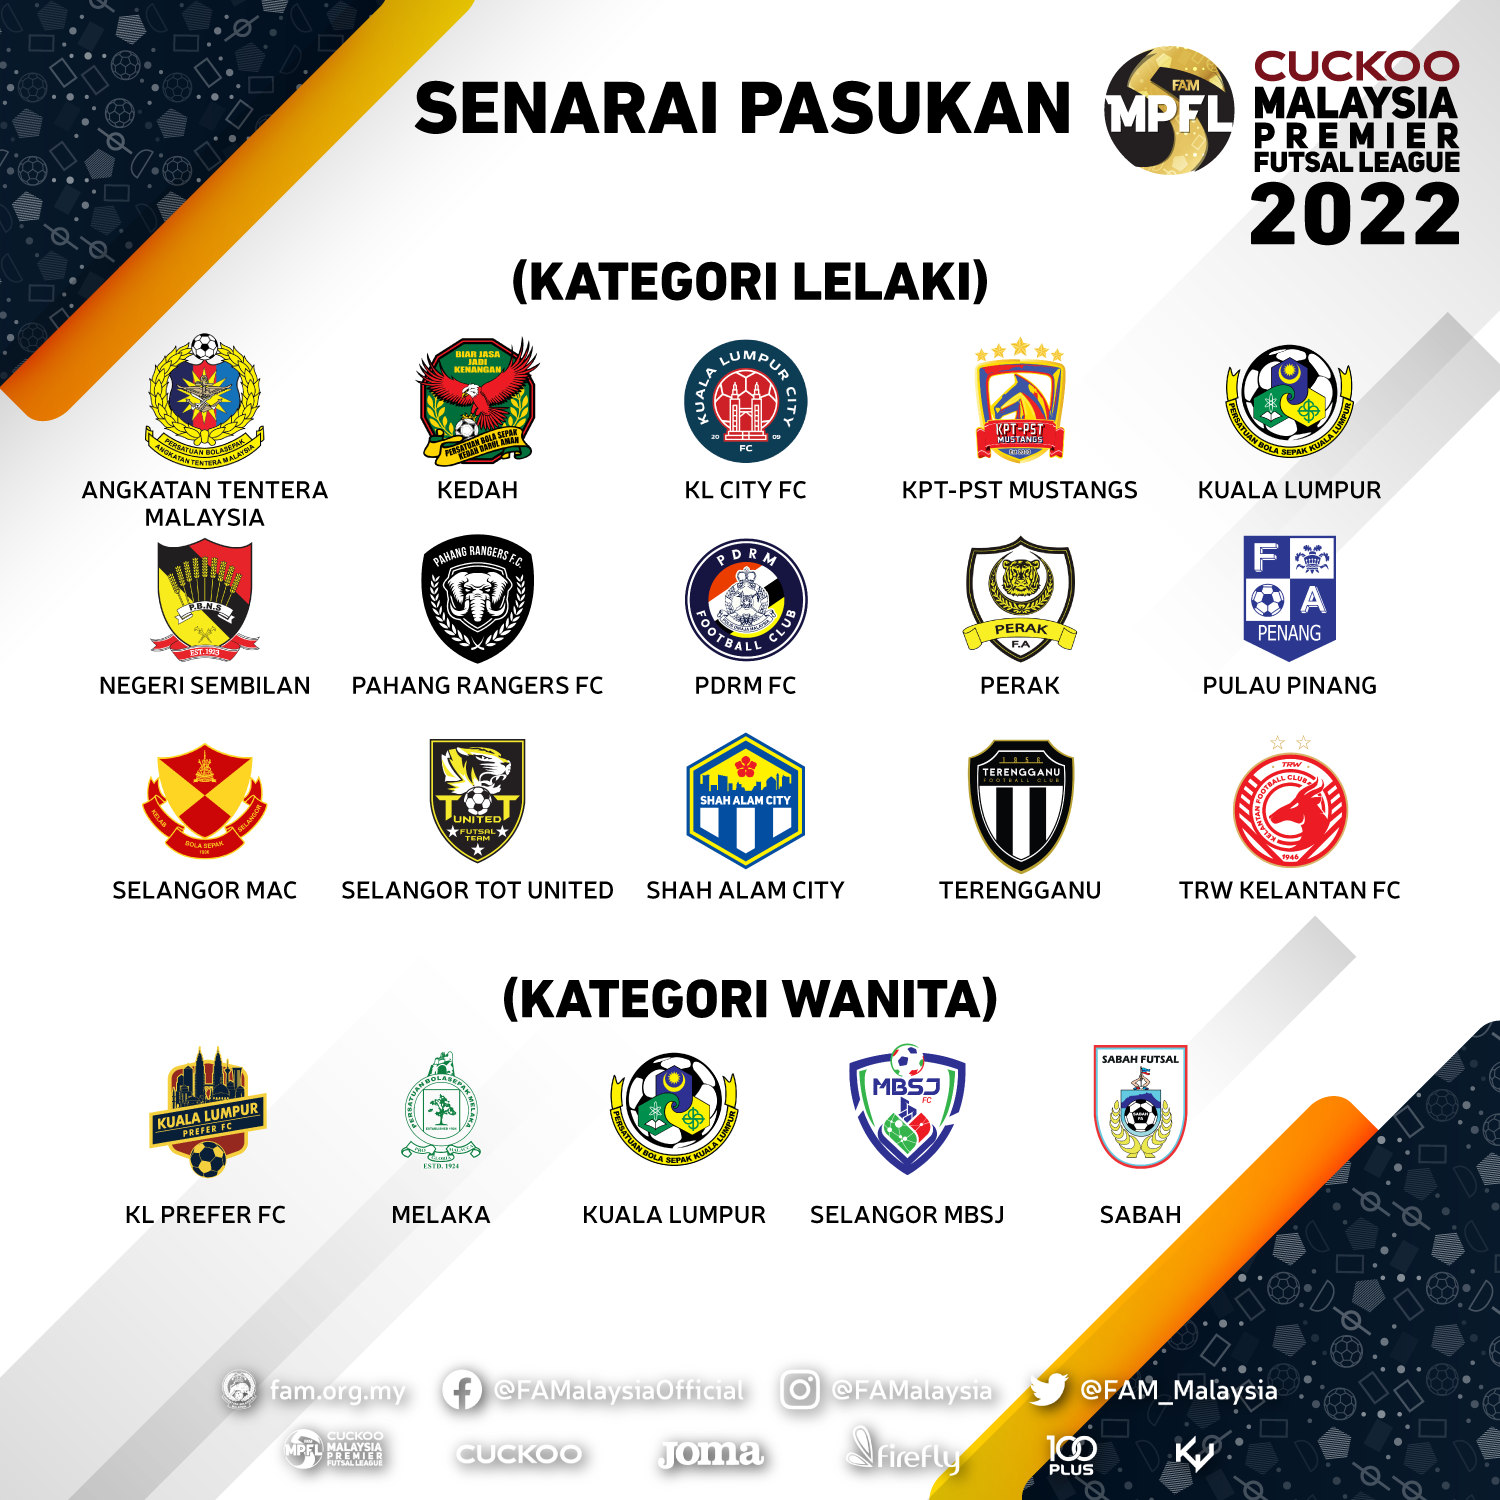 CUCKOO Malaysia Premier Futsal League (MPFL) 2022